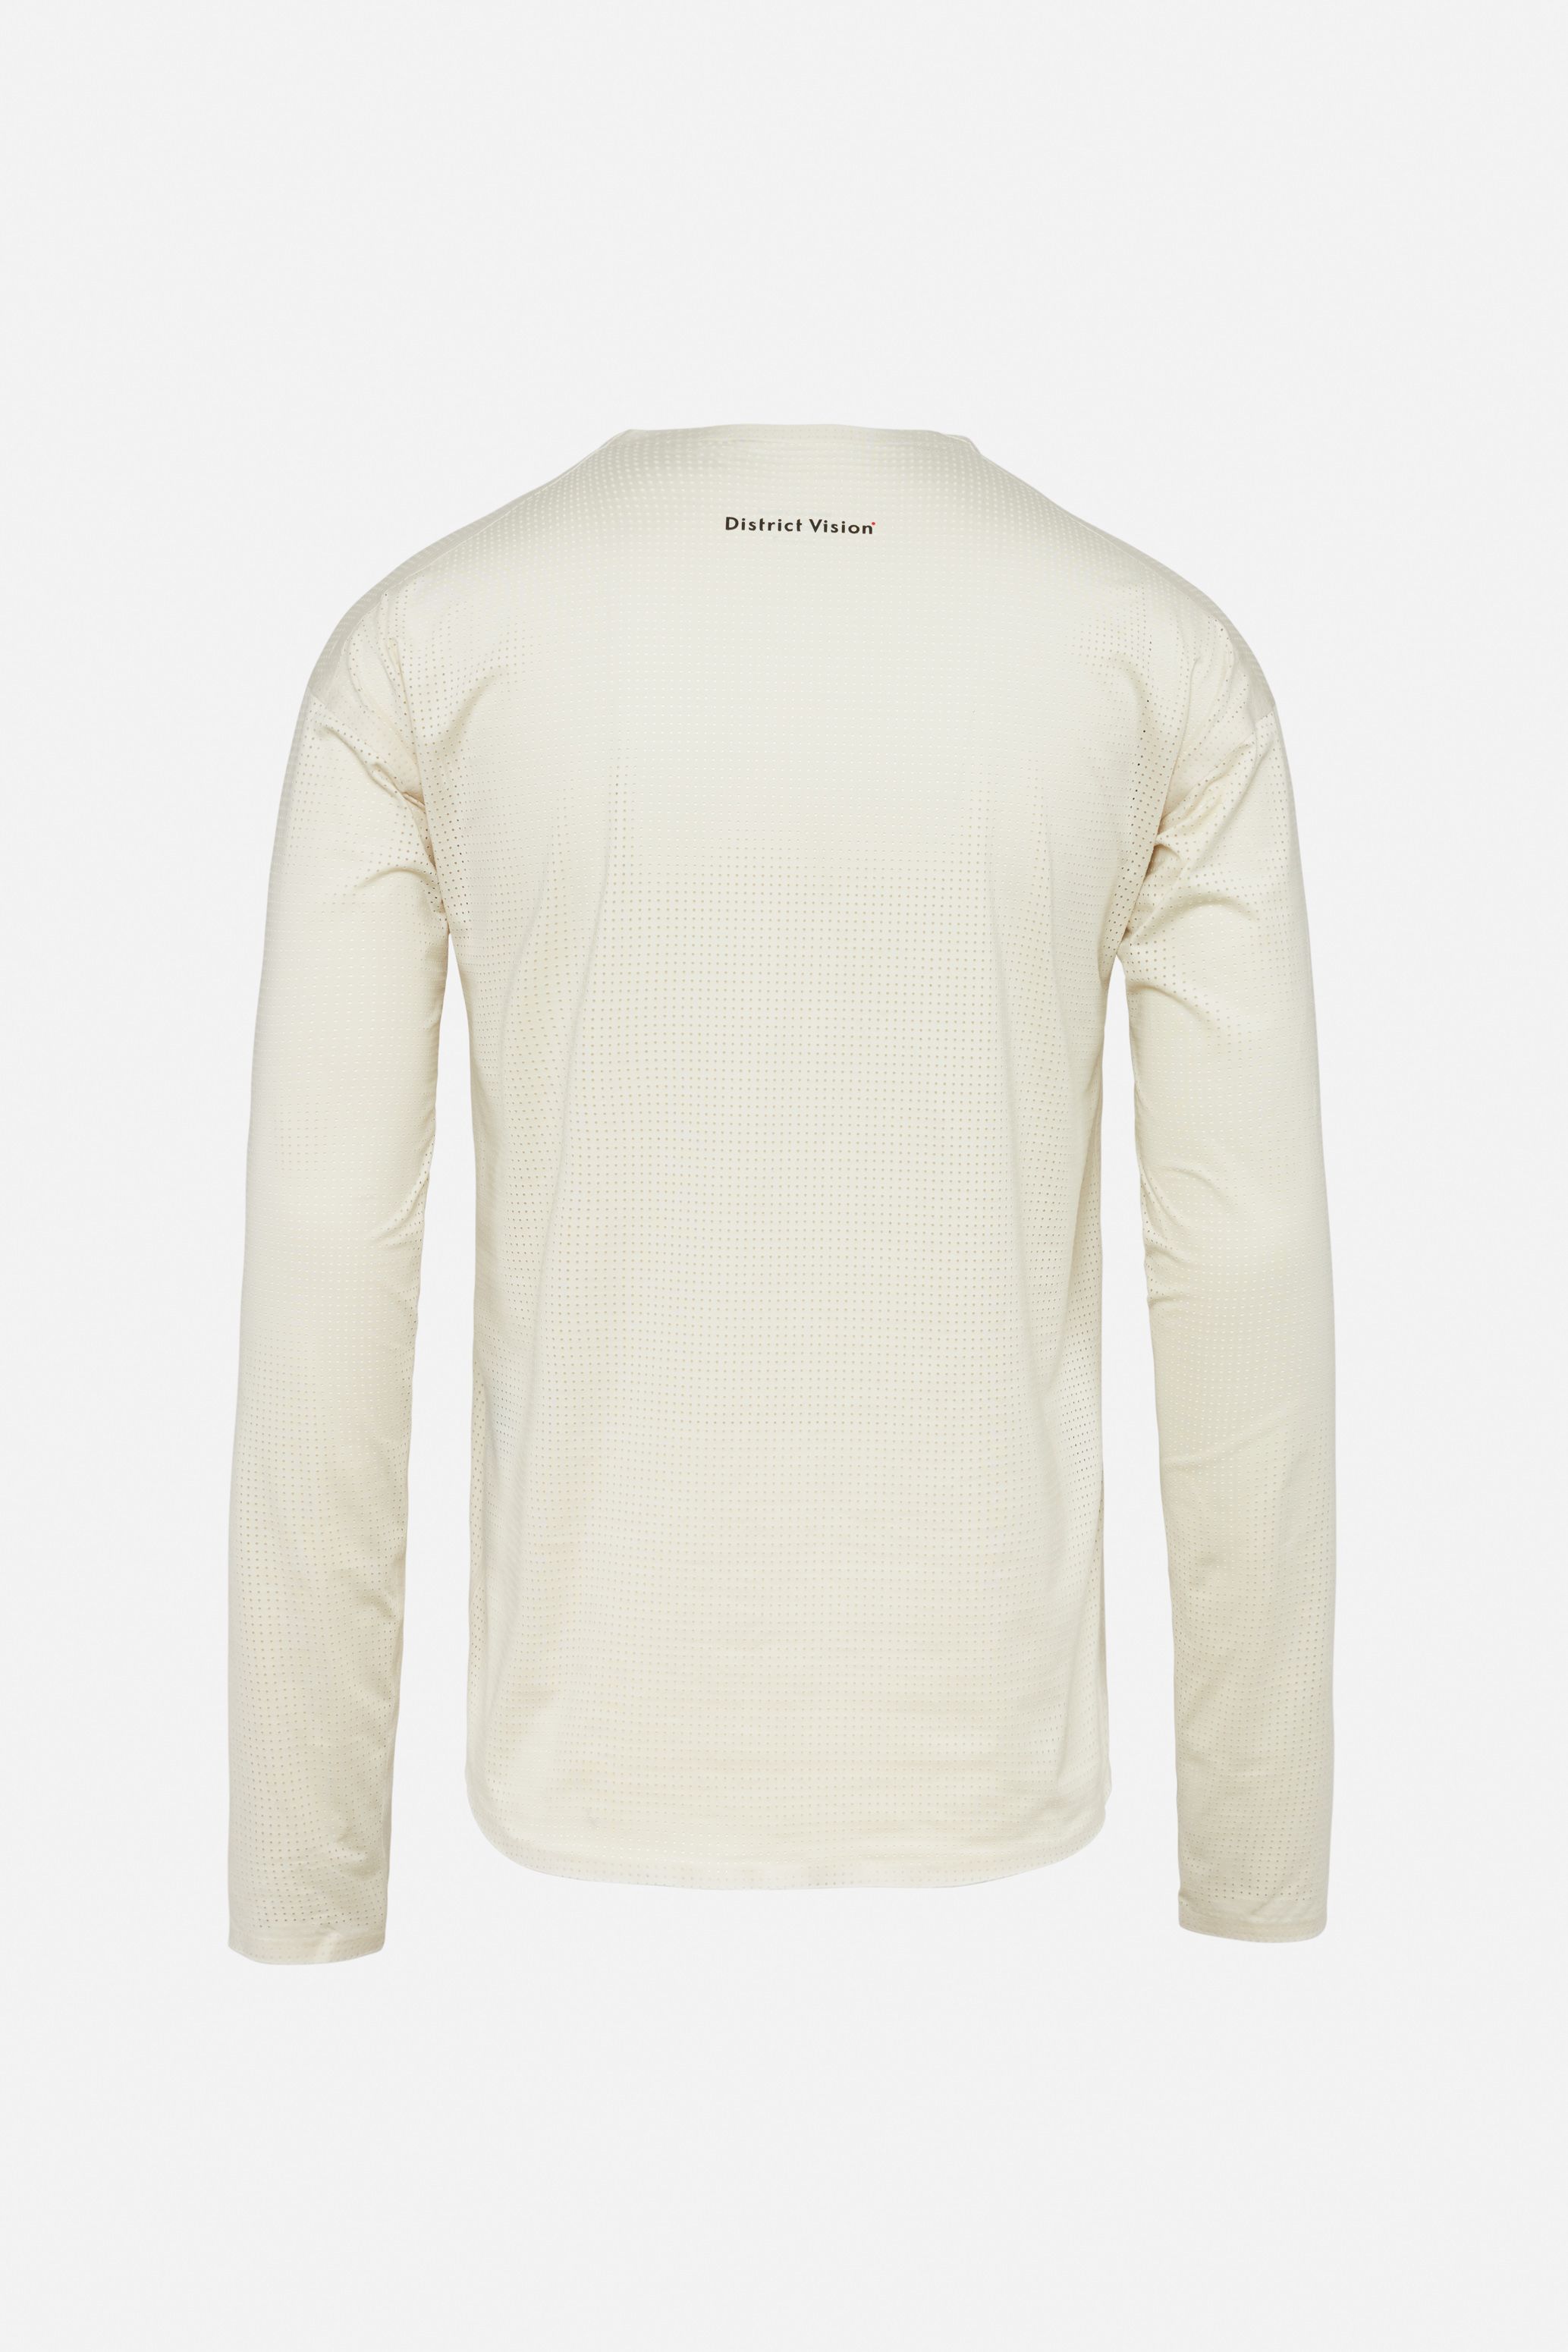 Palisade Long Sleeve Trail Shirt, White — District Vision